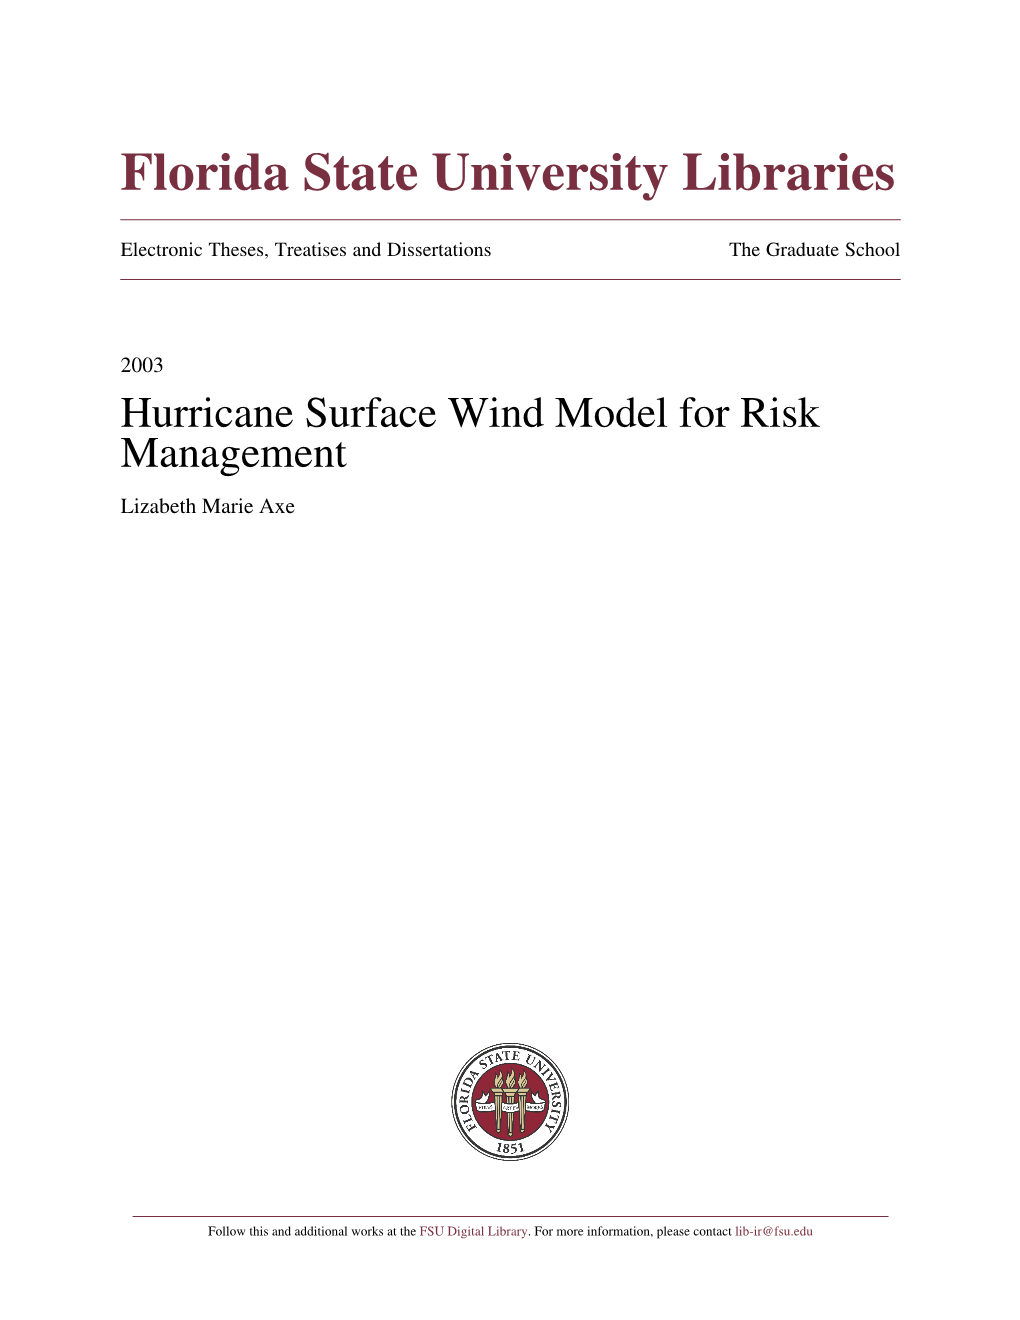 Hurricane Surface Wind Model for Risk Management Lizabeth Marie Axe